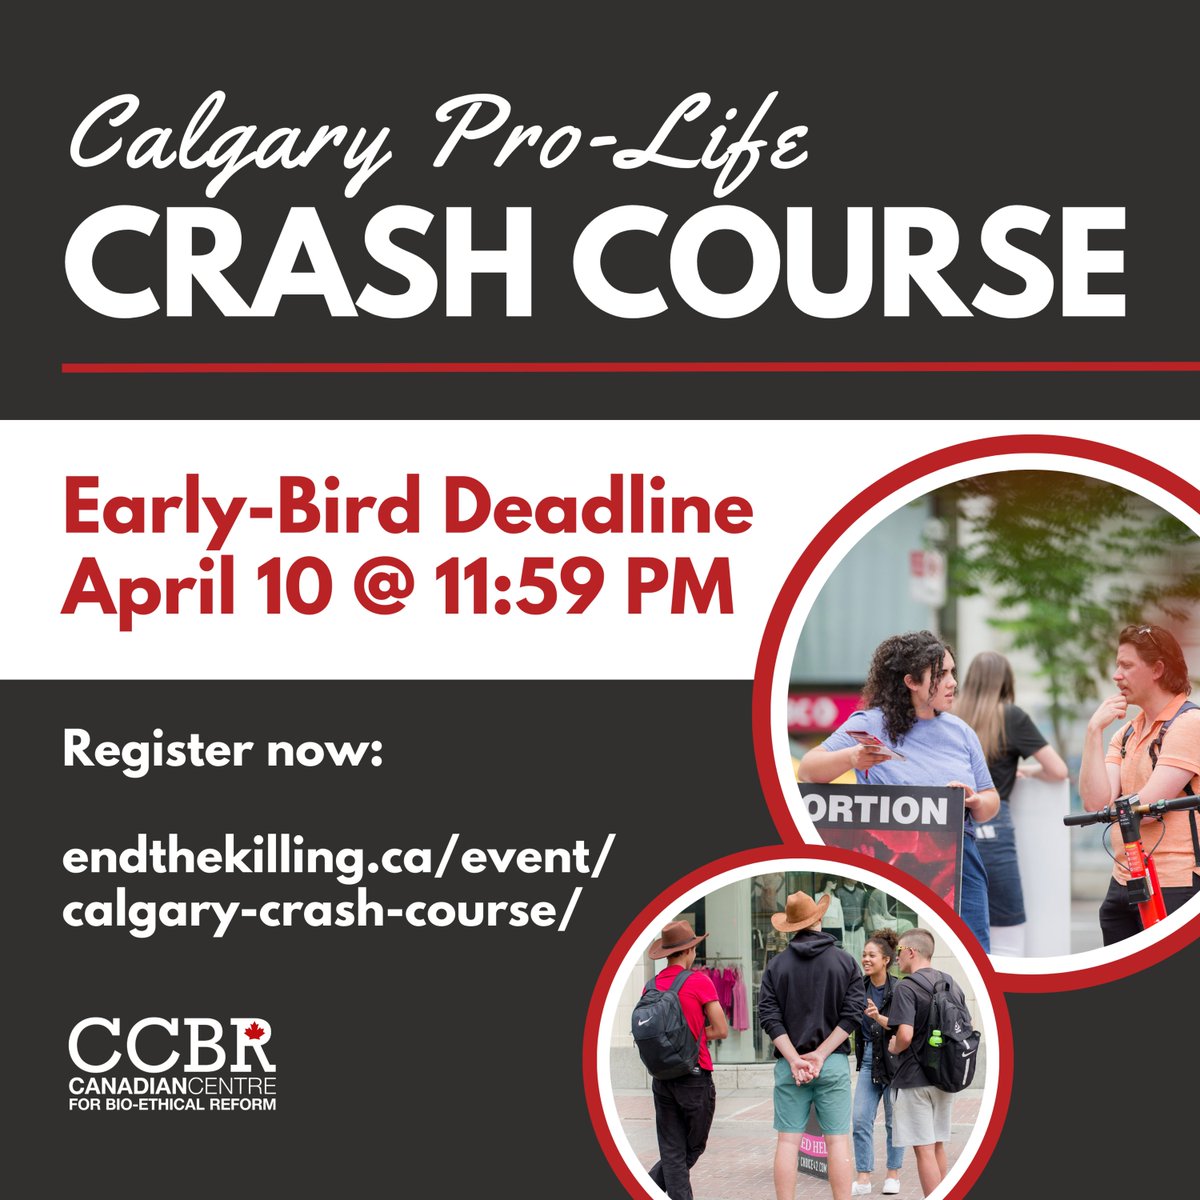 Apply by tomorrow night at 11:59 to get early bird pricing! 

endthekilling.ca/crash-course

#endthekilling #crashcourse #takeaction #prolife #endabortion